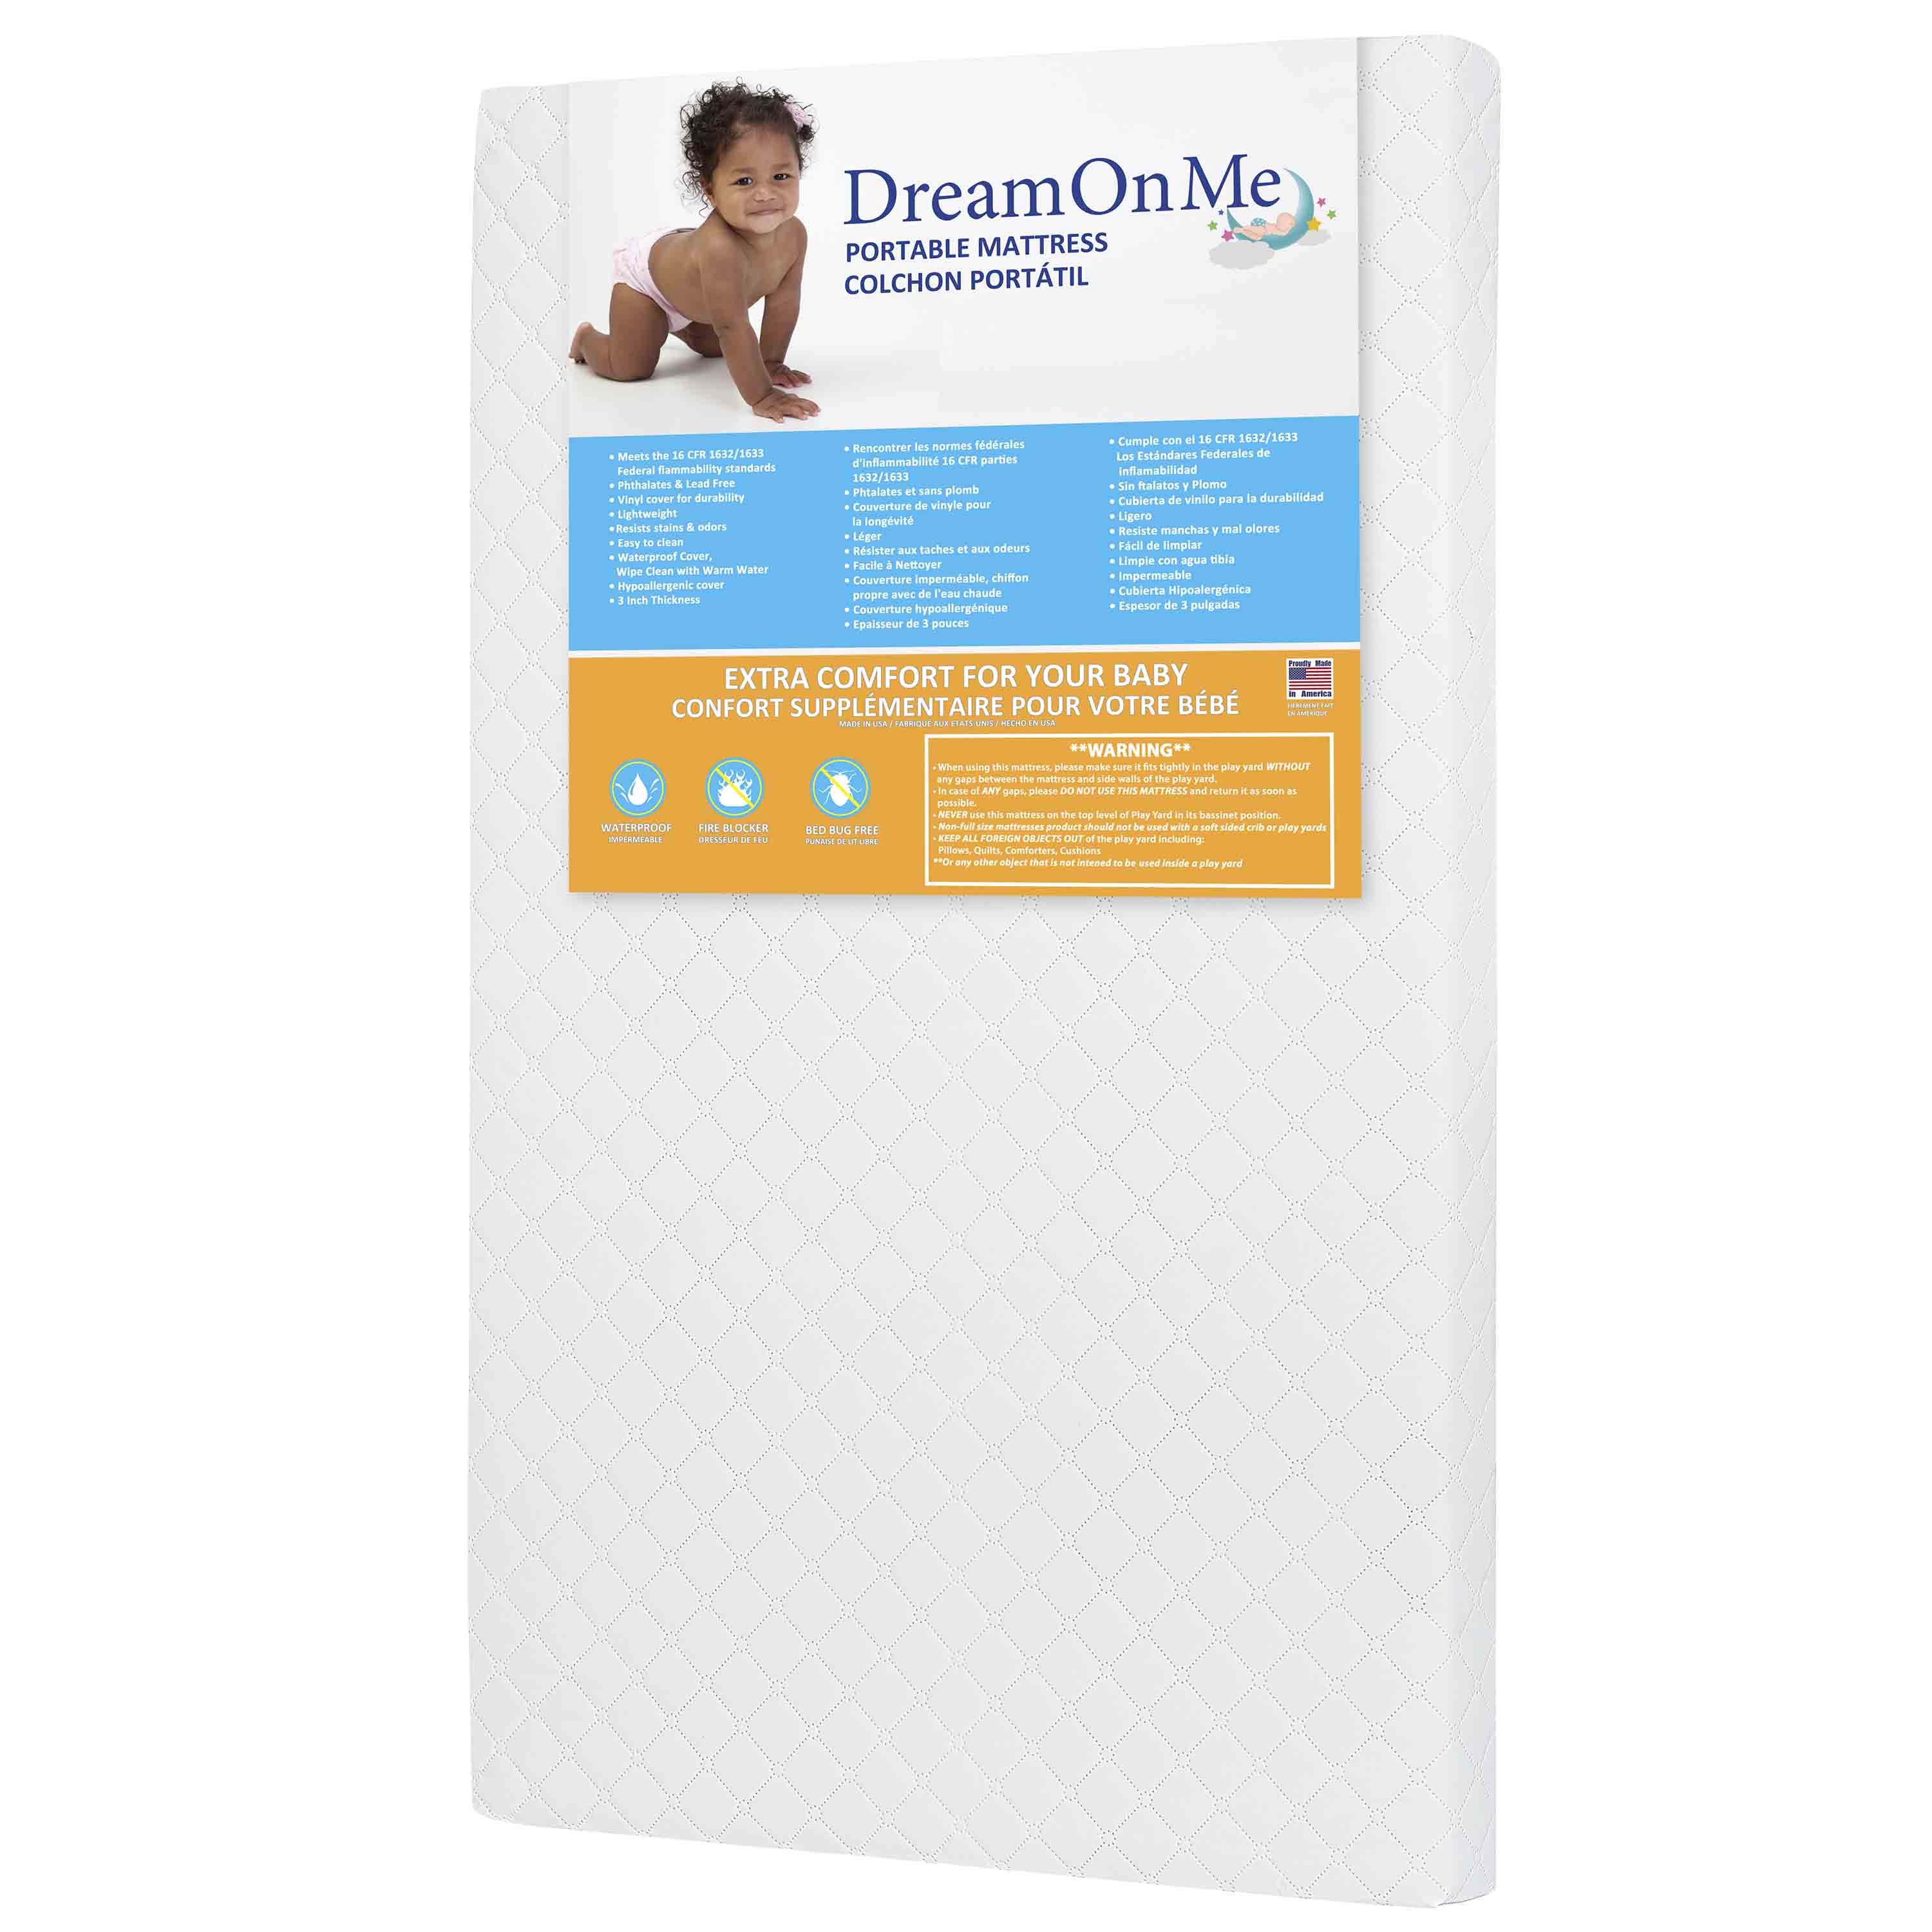 White Dream On Me 3 Extra Firm Portable Crib Mattress 